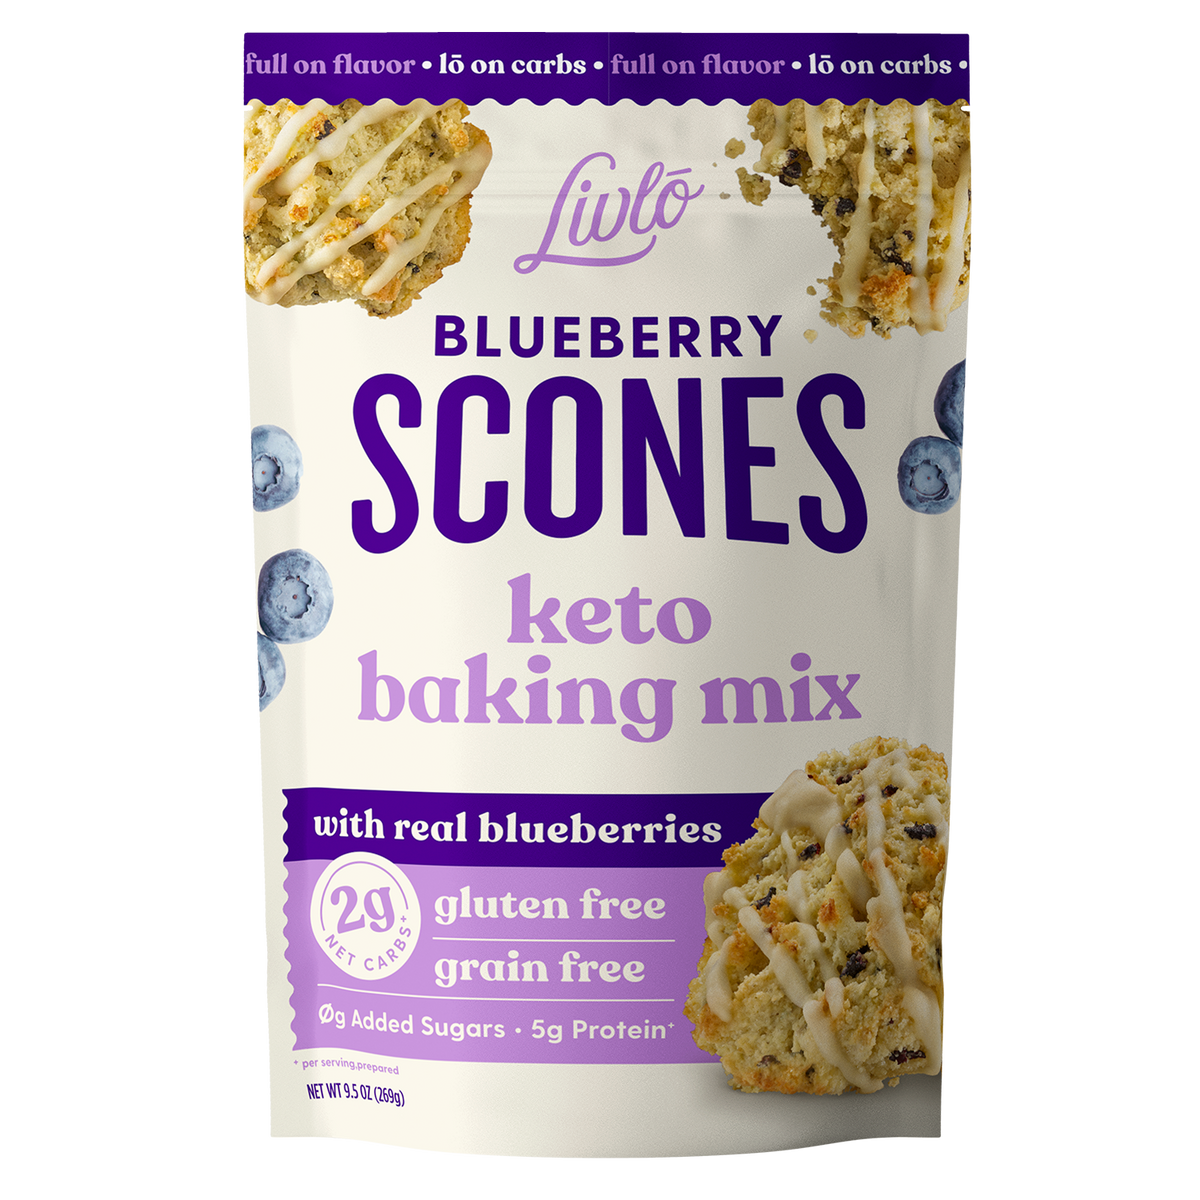 Blueberry Scone Mix